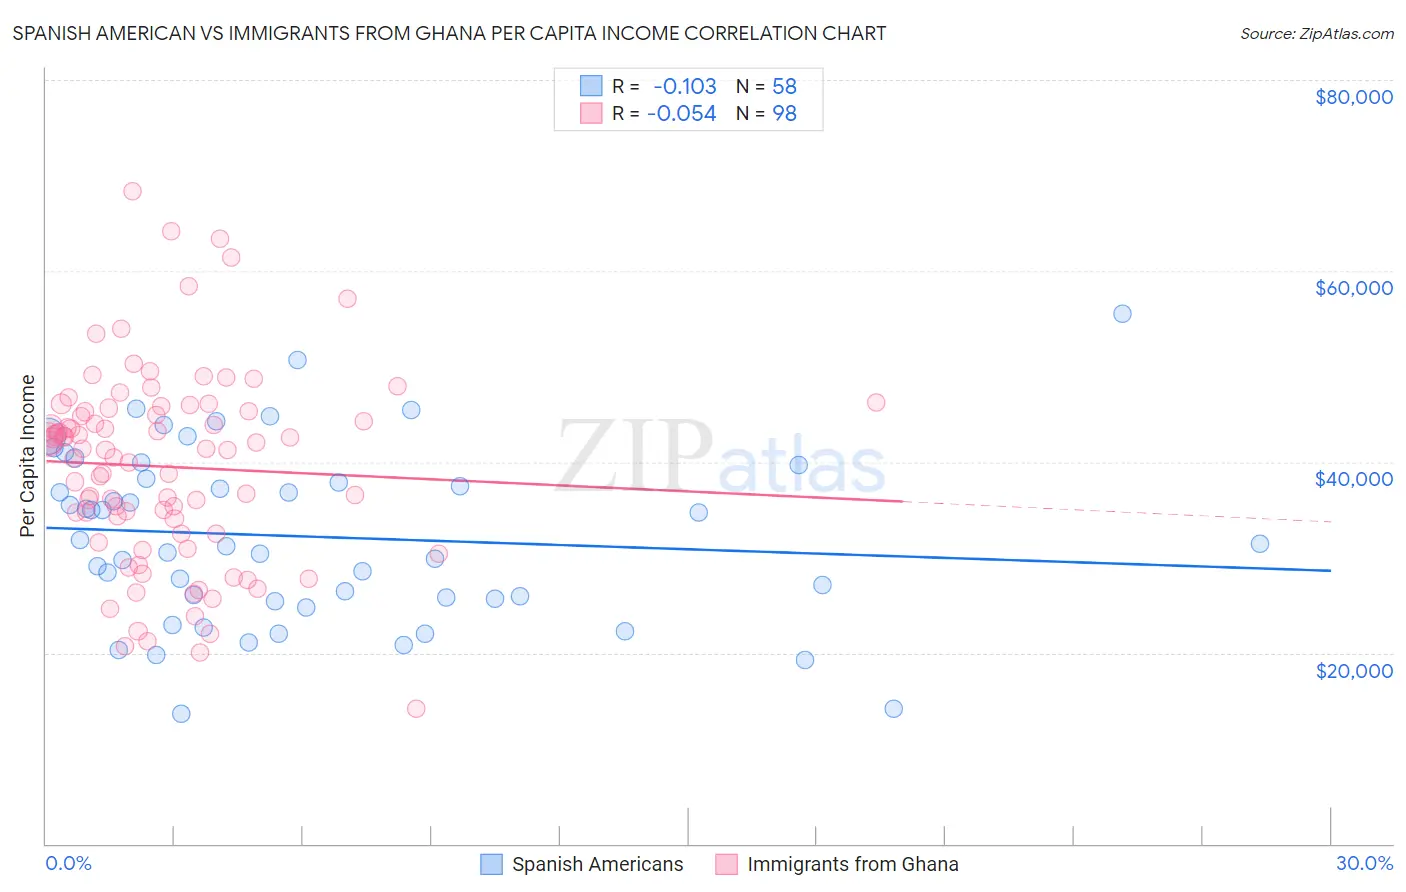 Spanish American vs Immigrants from Ghana Per Capita Income